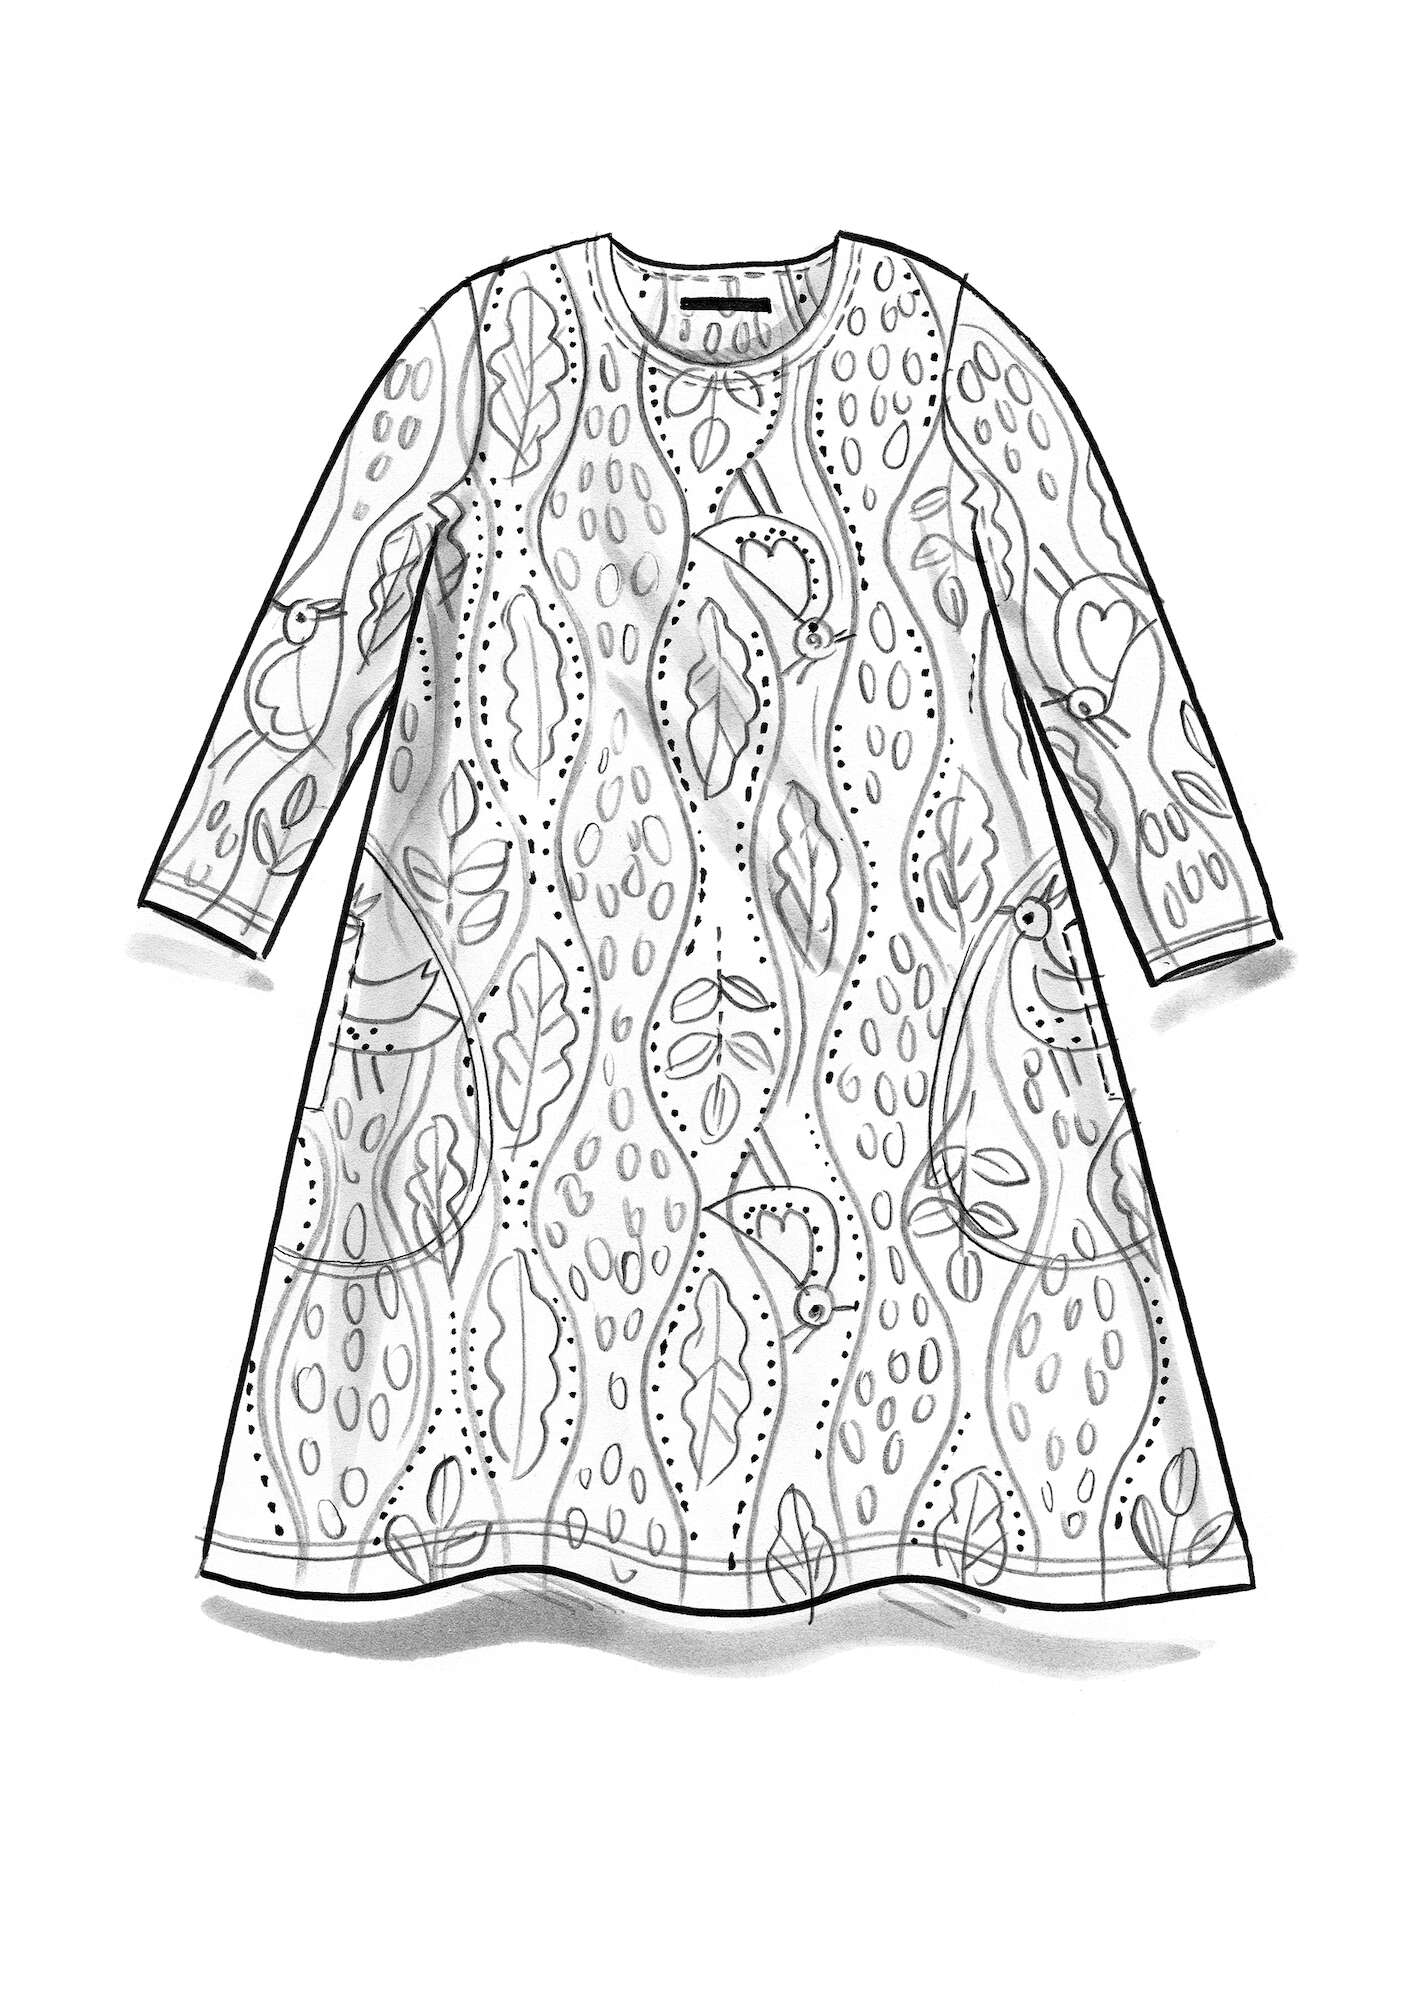 Tricot jurk  Polly  van biologisch katoen/modal chili